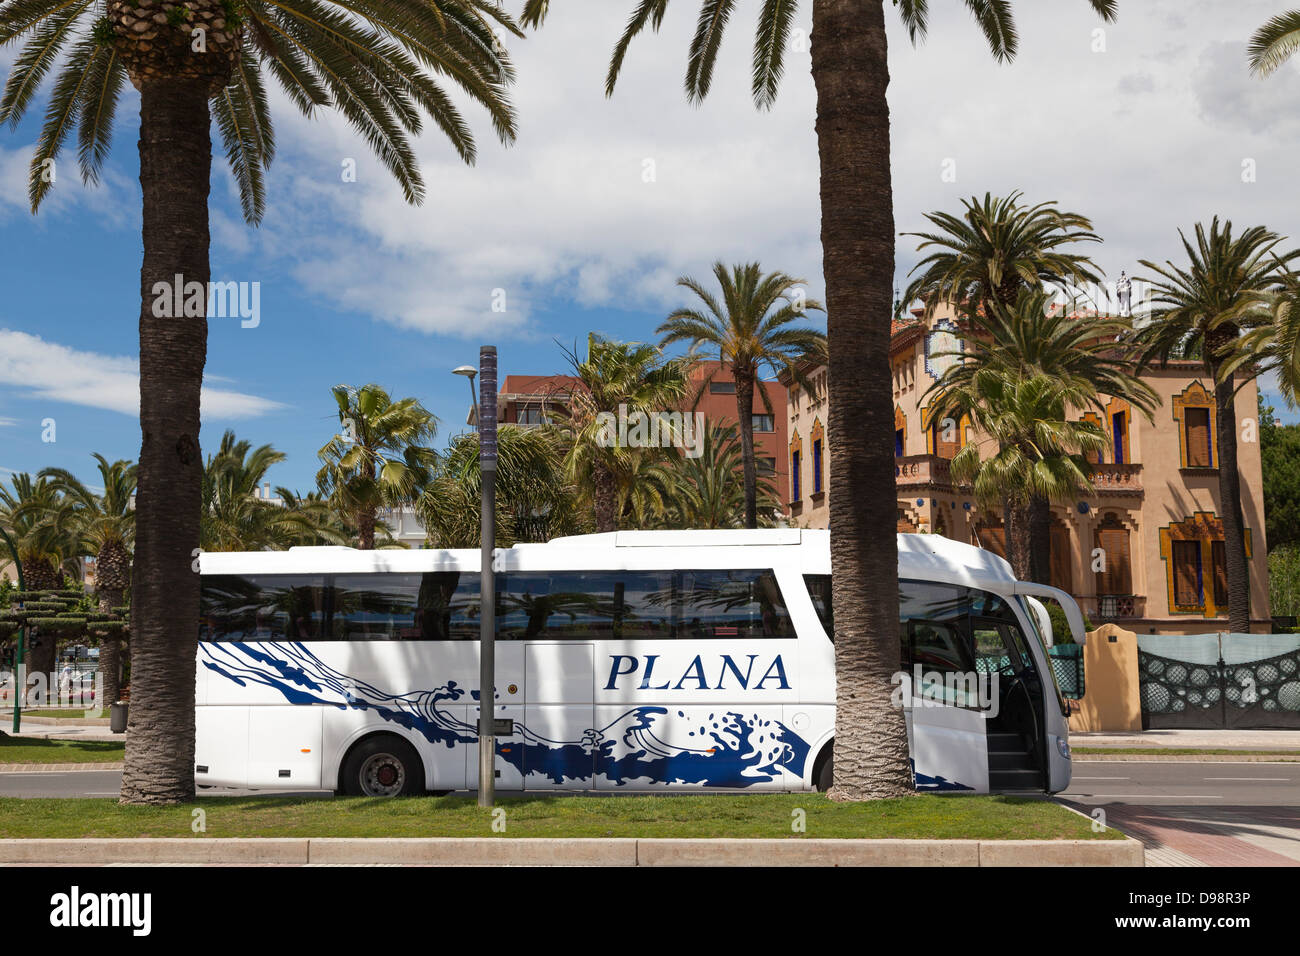 Plana bus on the promenade road at Salou Stock Photo - Alamy